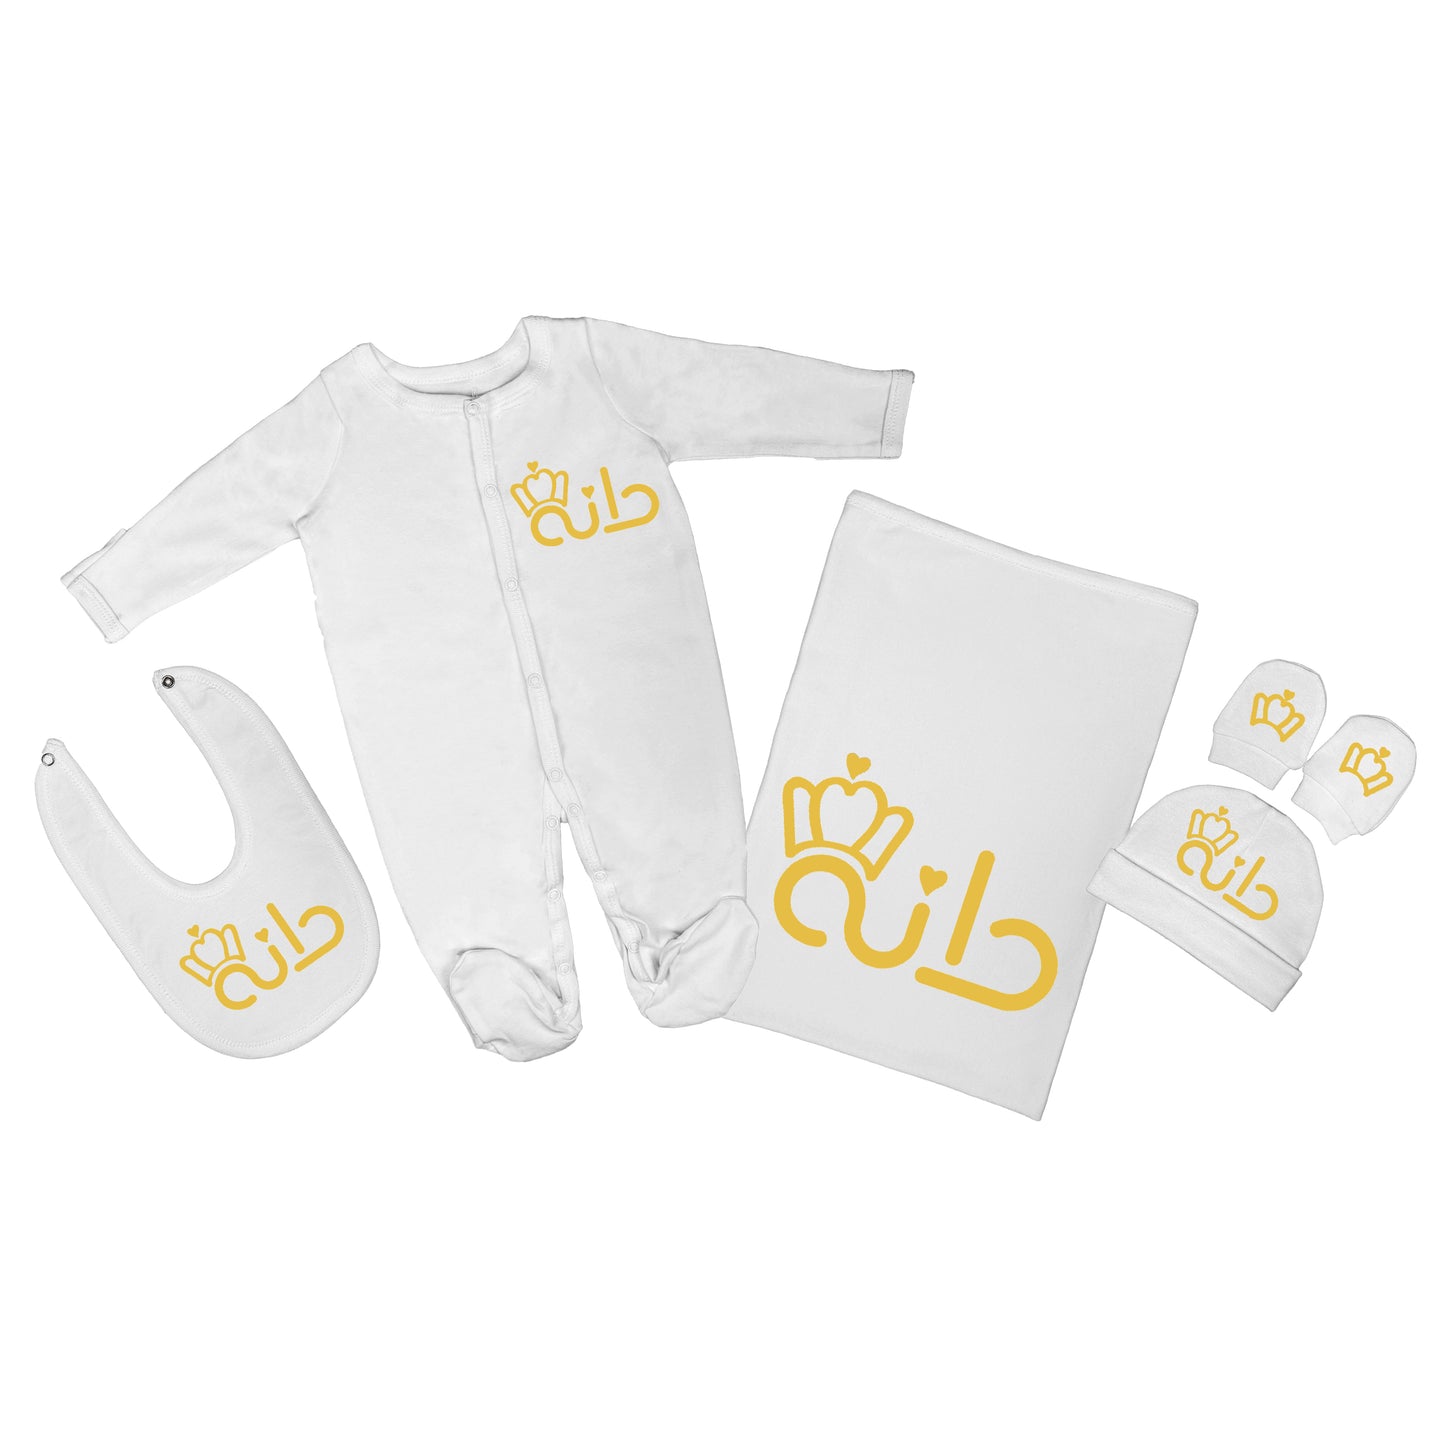 Personalized Baby Clothing Set (Blanket, Sleepsuit, Beanie, Bib, Mittens) - Princess